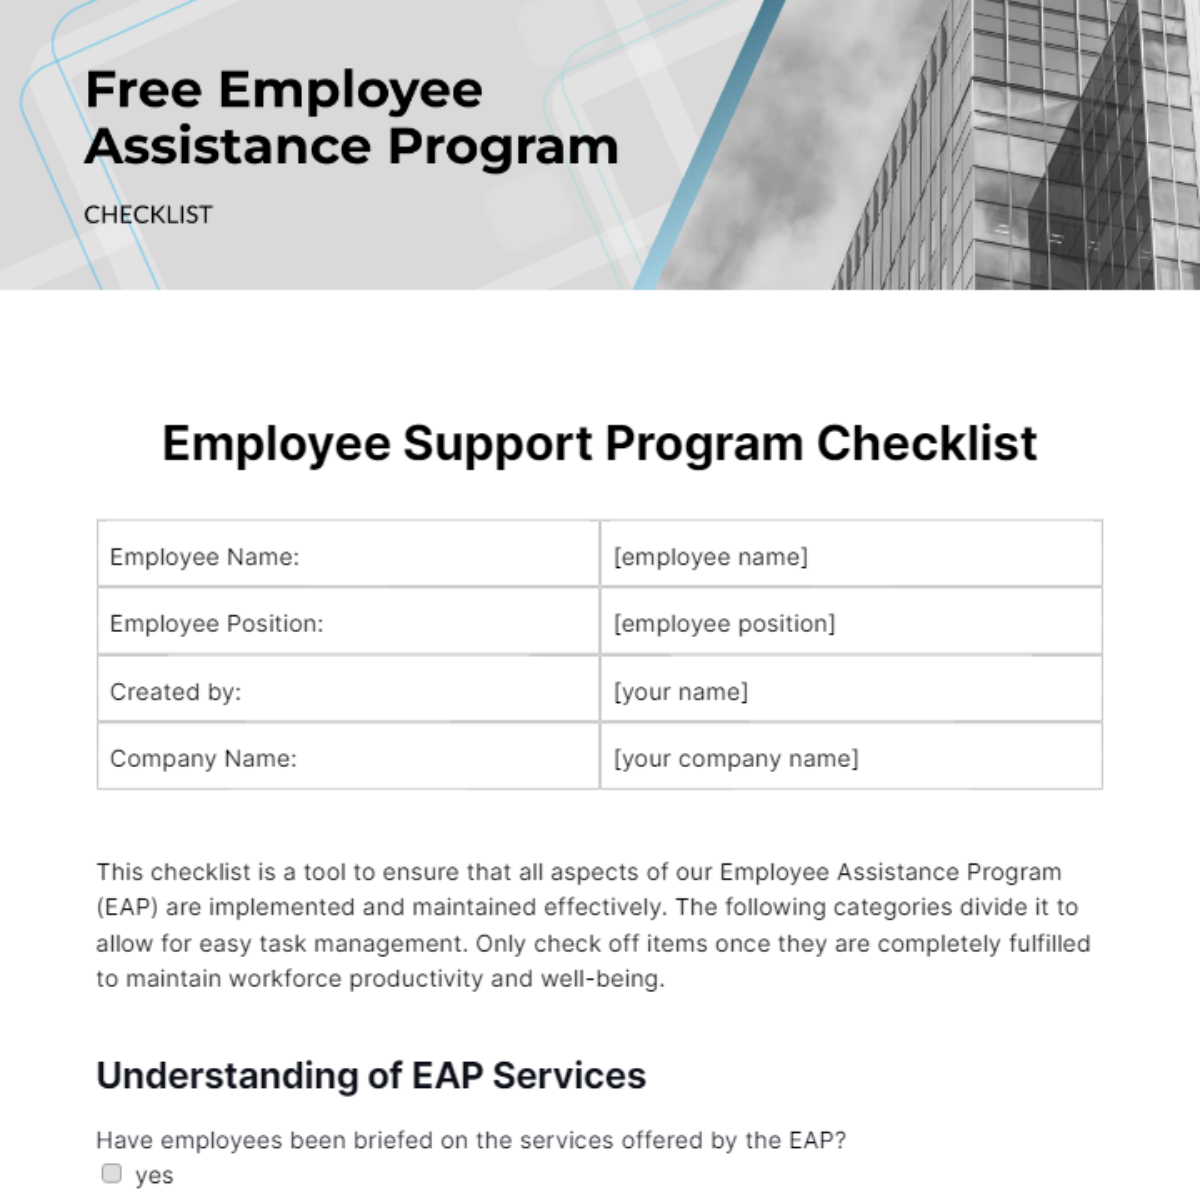 Free Employee Assistance Program Checklist Template